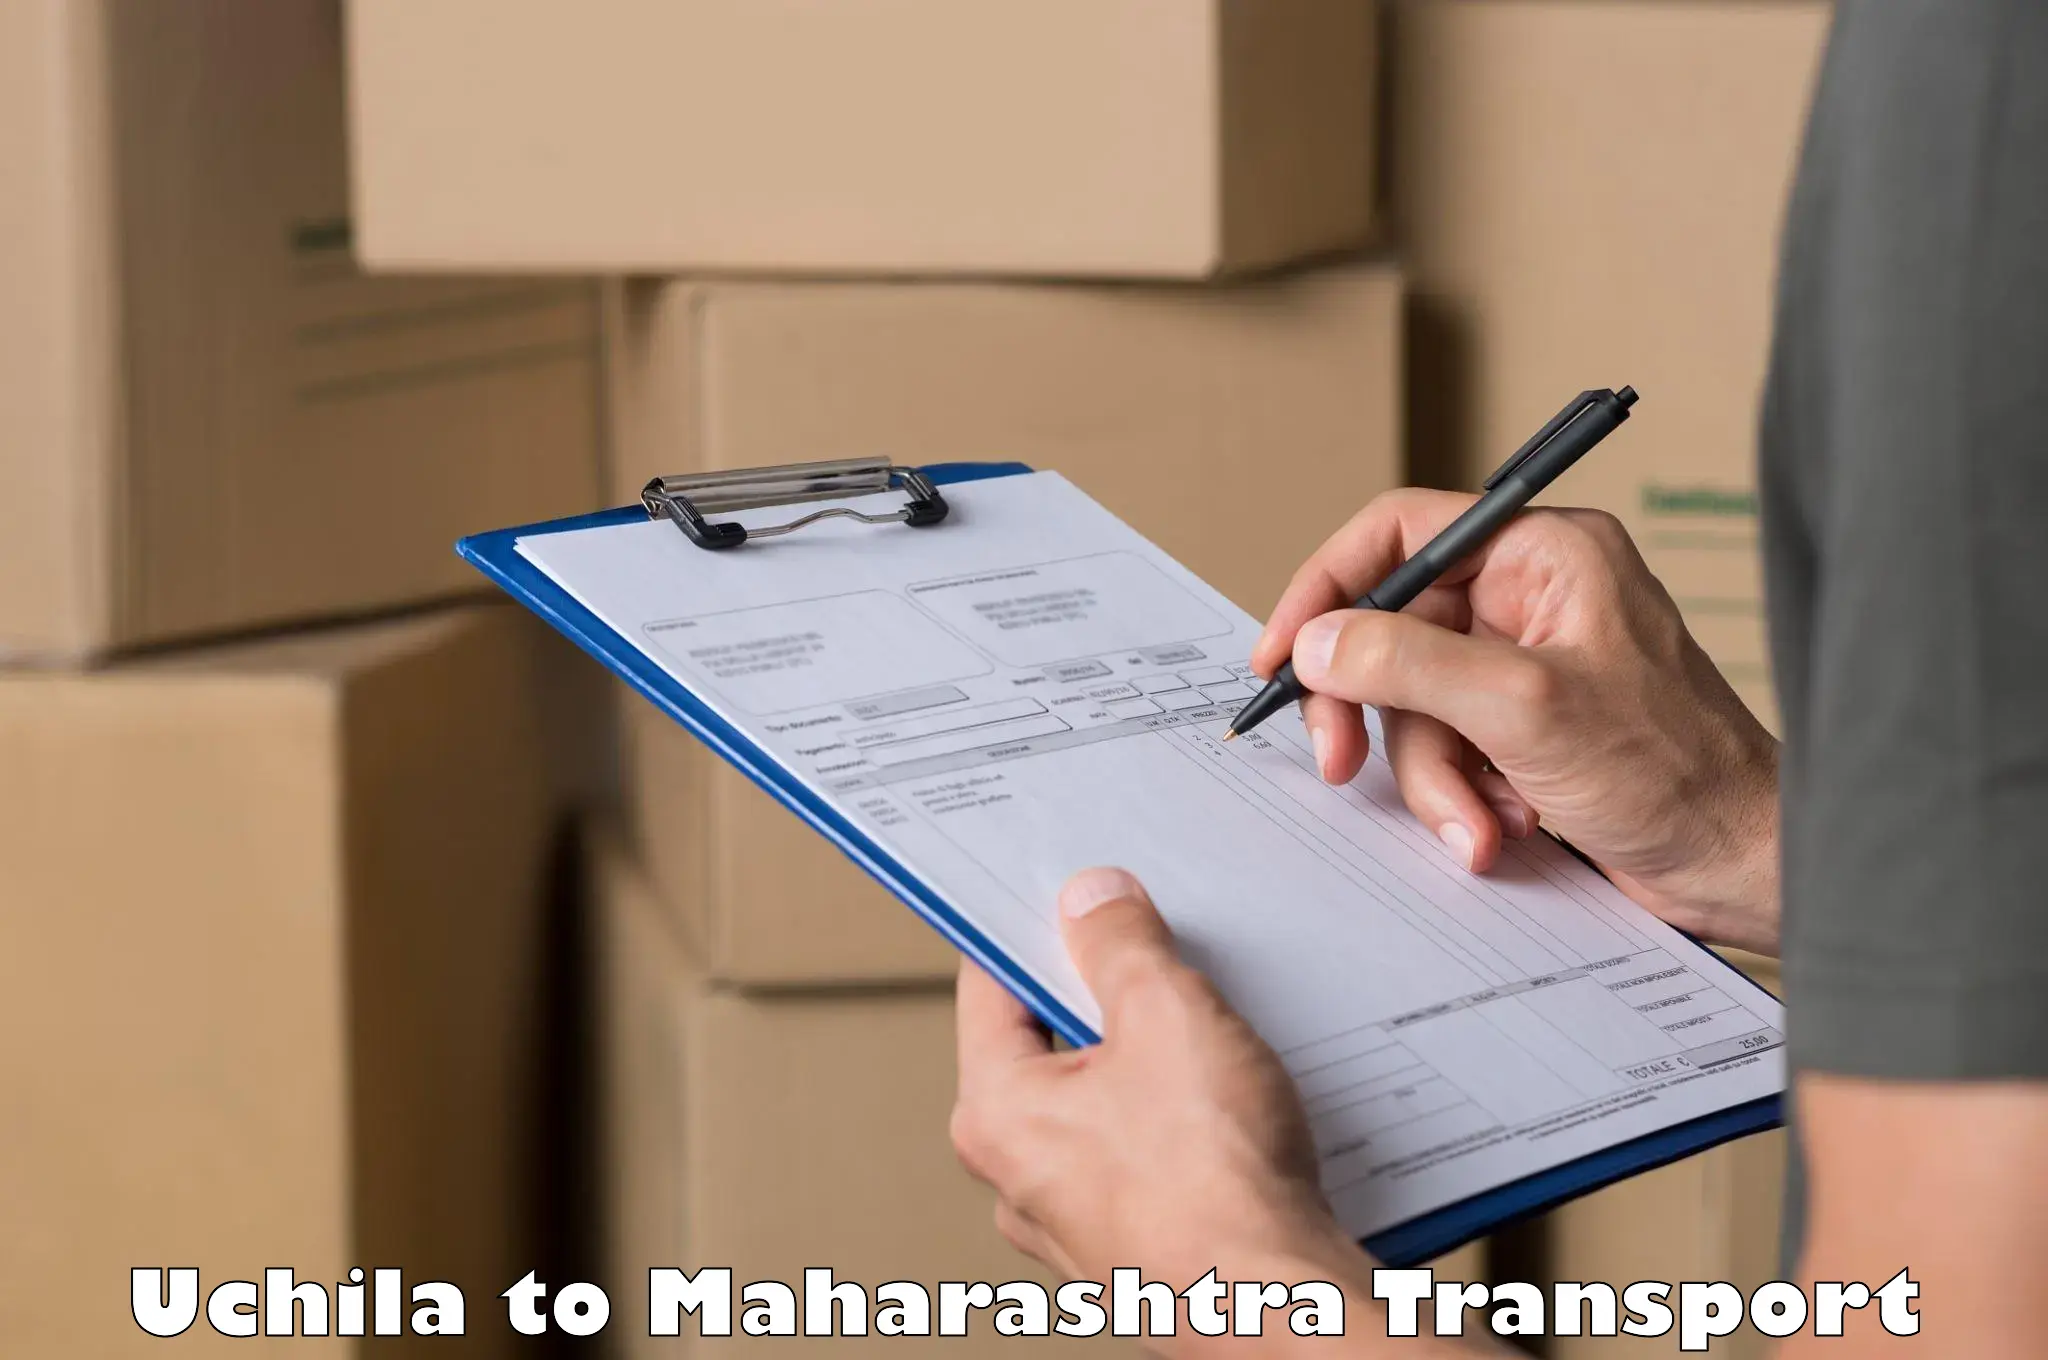 Delivery service Uchila to Nandurbar